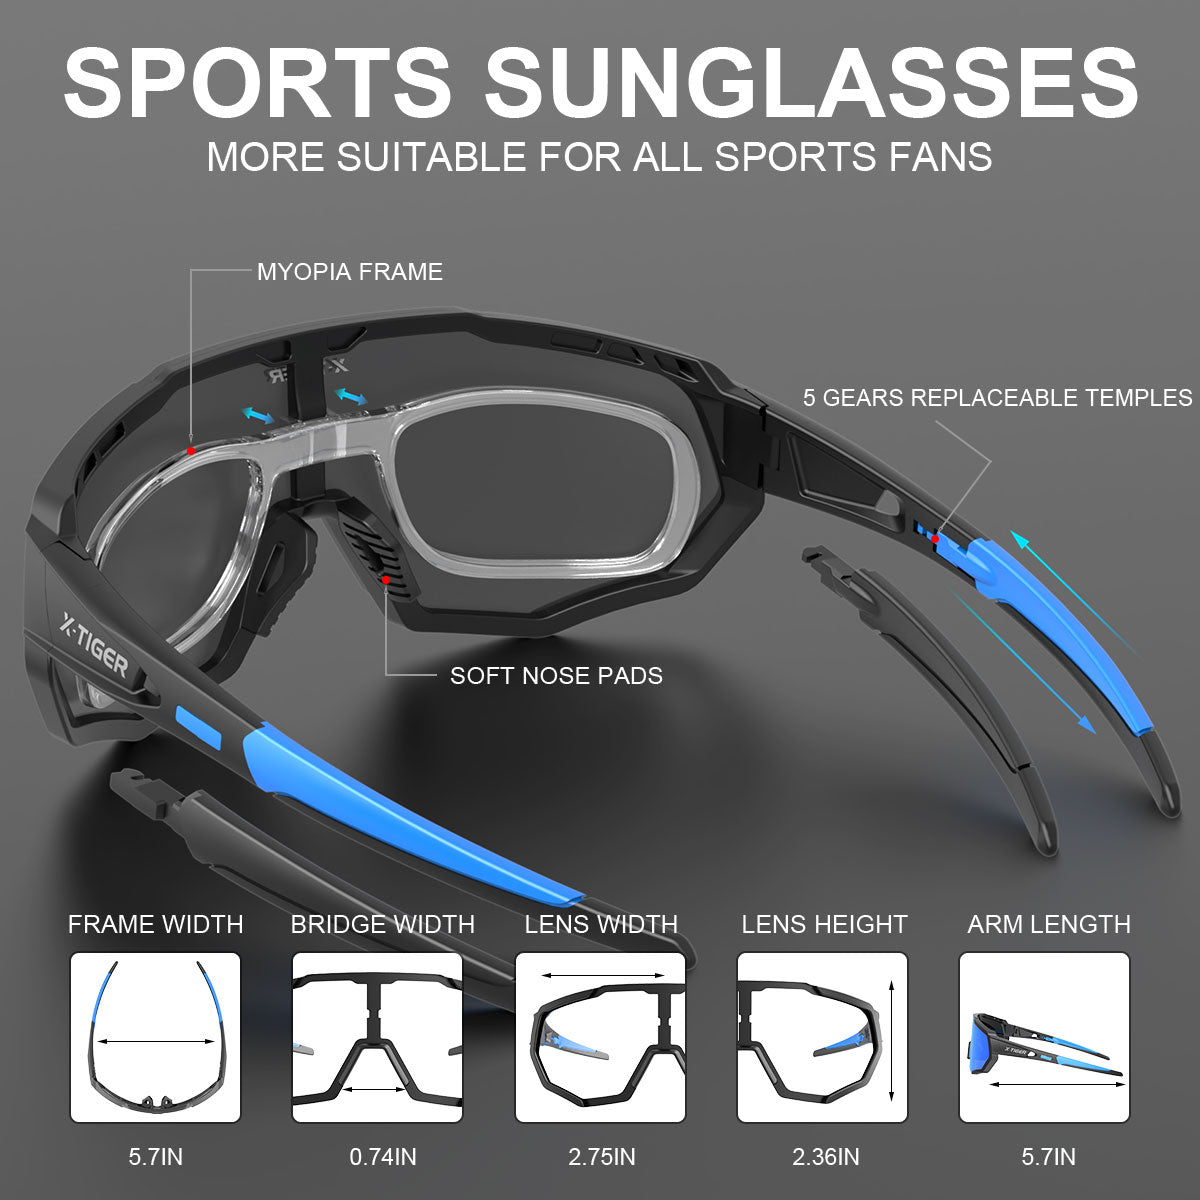 JPC Polarized Cycling Glasses - X-Tiger